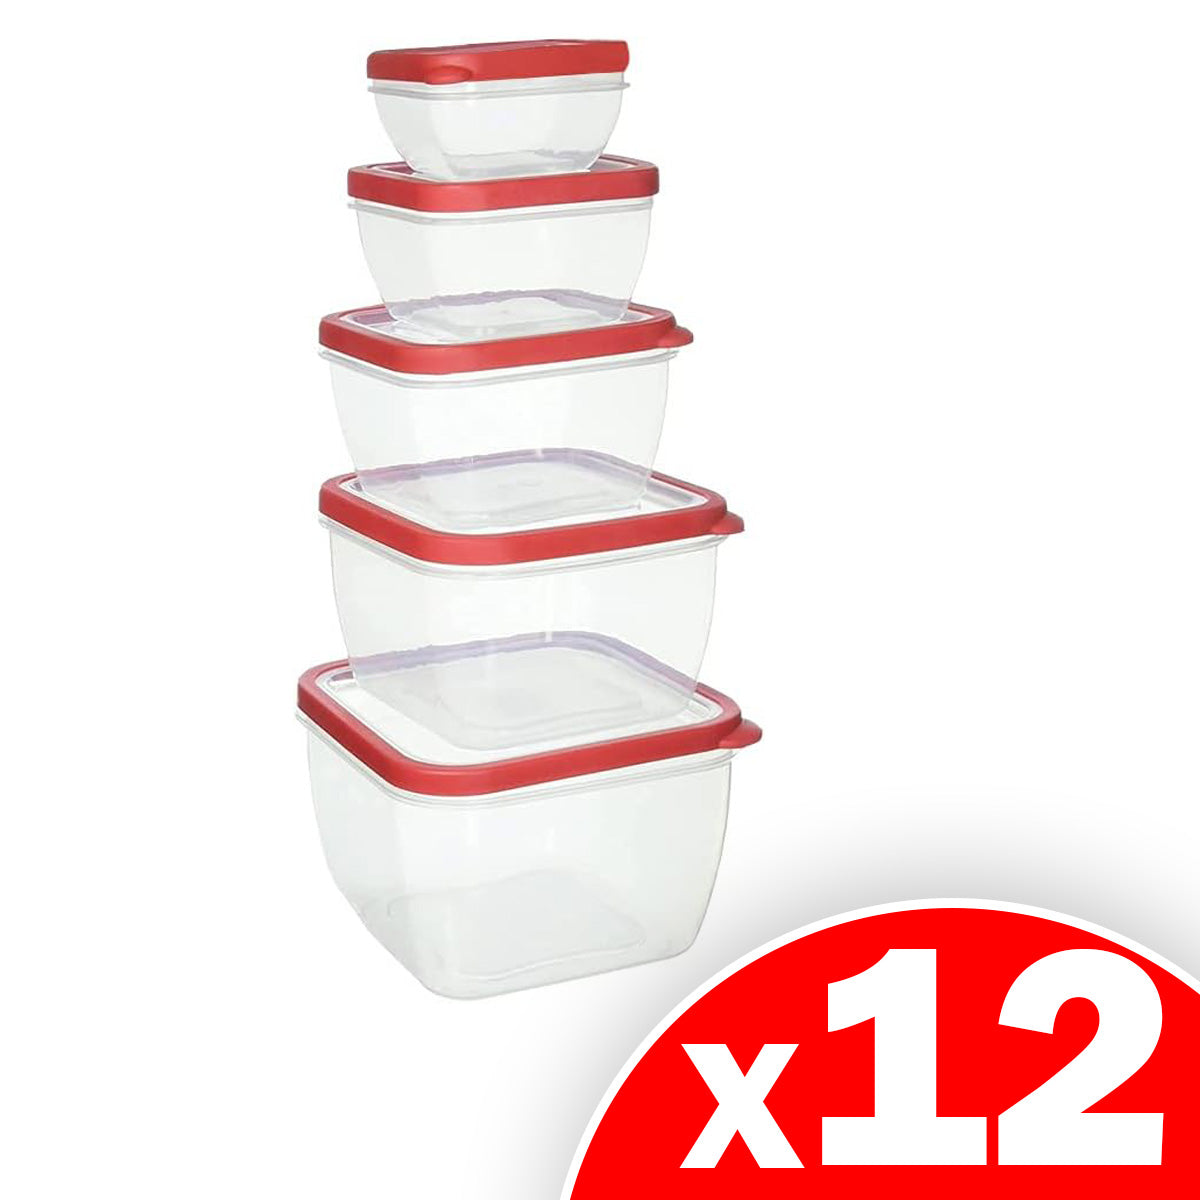 EDGE 10 Piece Nesting  Square Food Storage Set (Red), 12 Pack